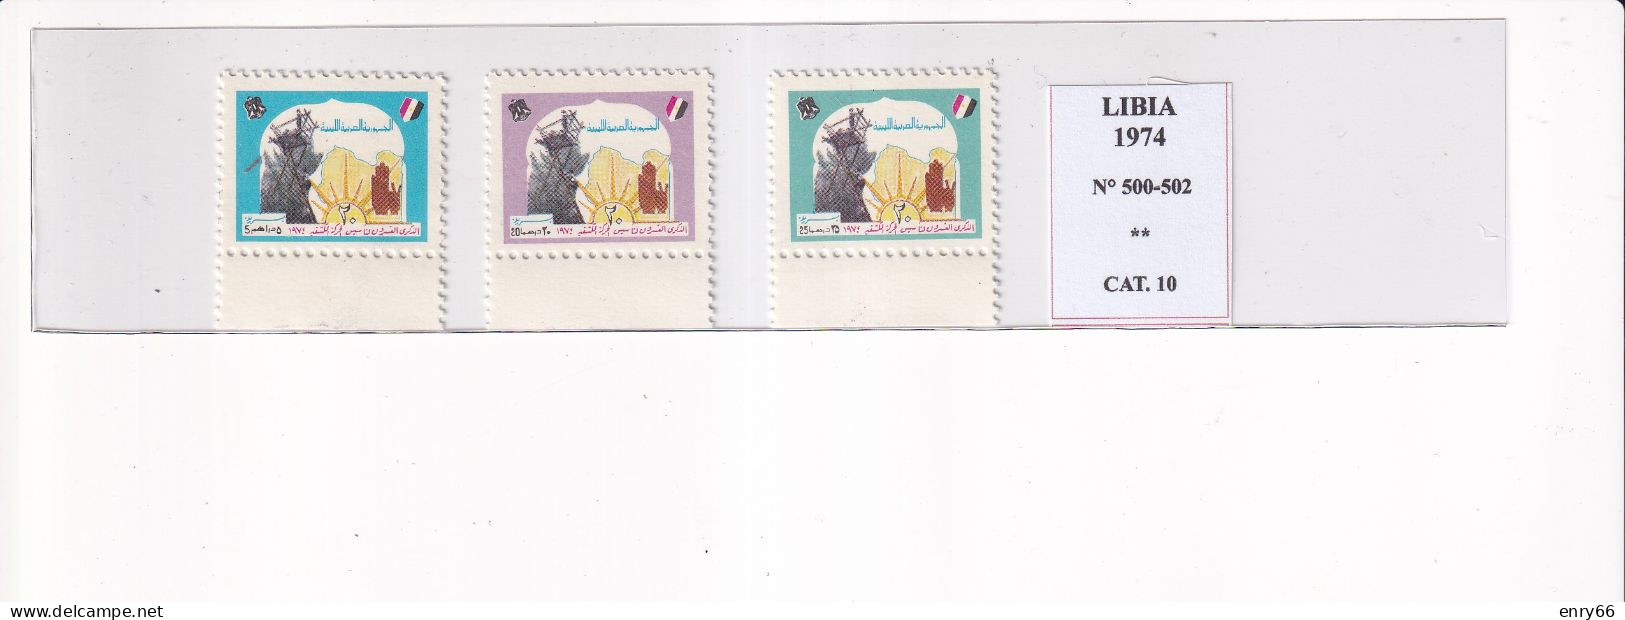 LIBIA 1974 N°500-502 MNH - Libia